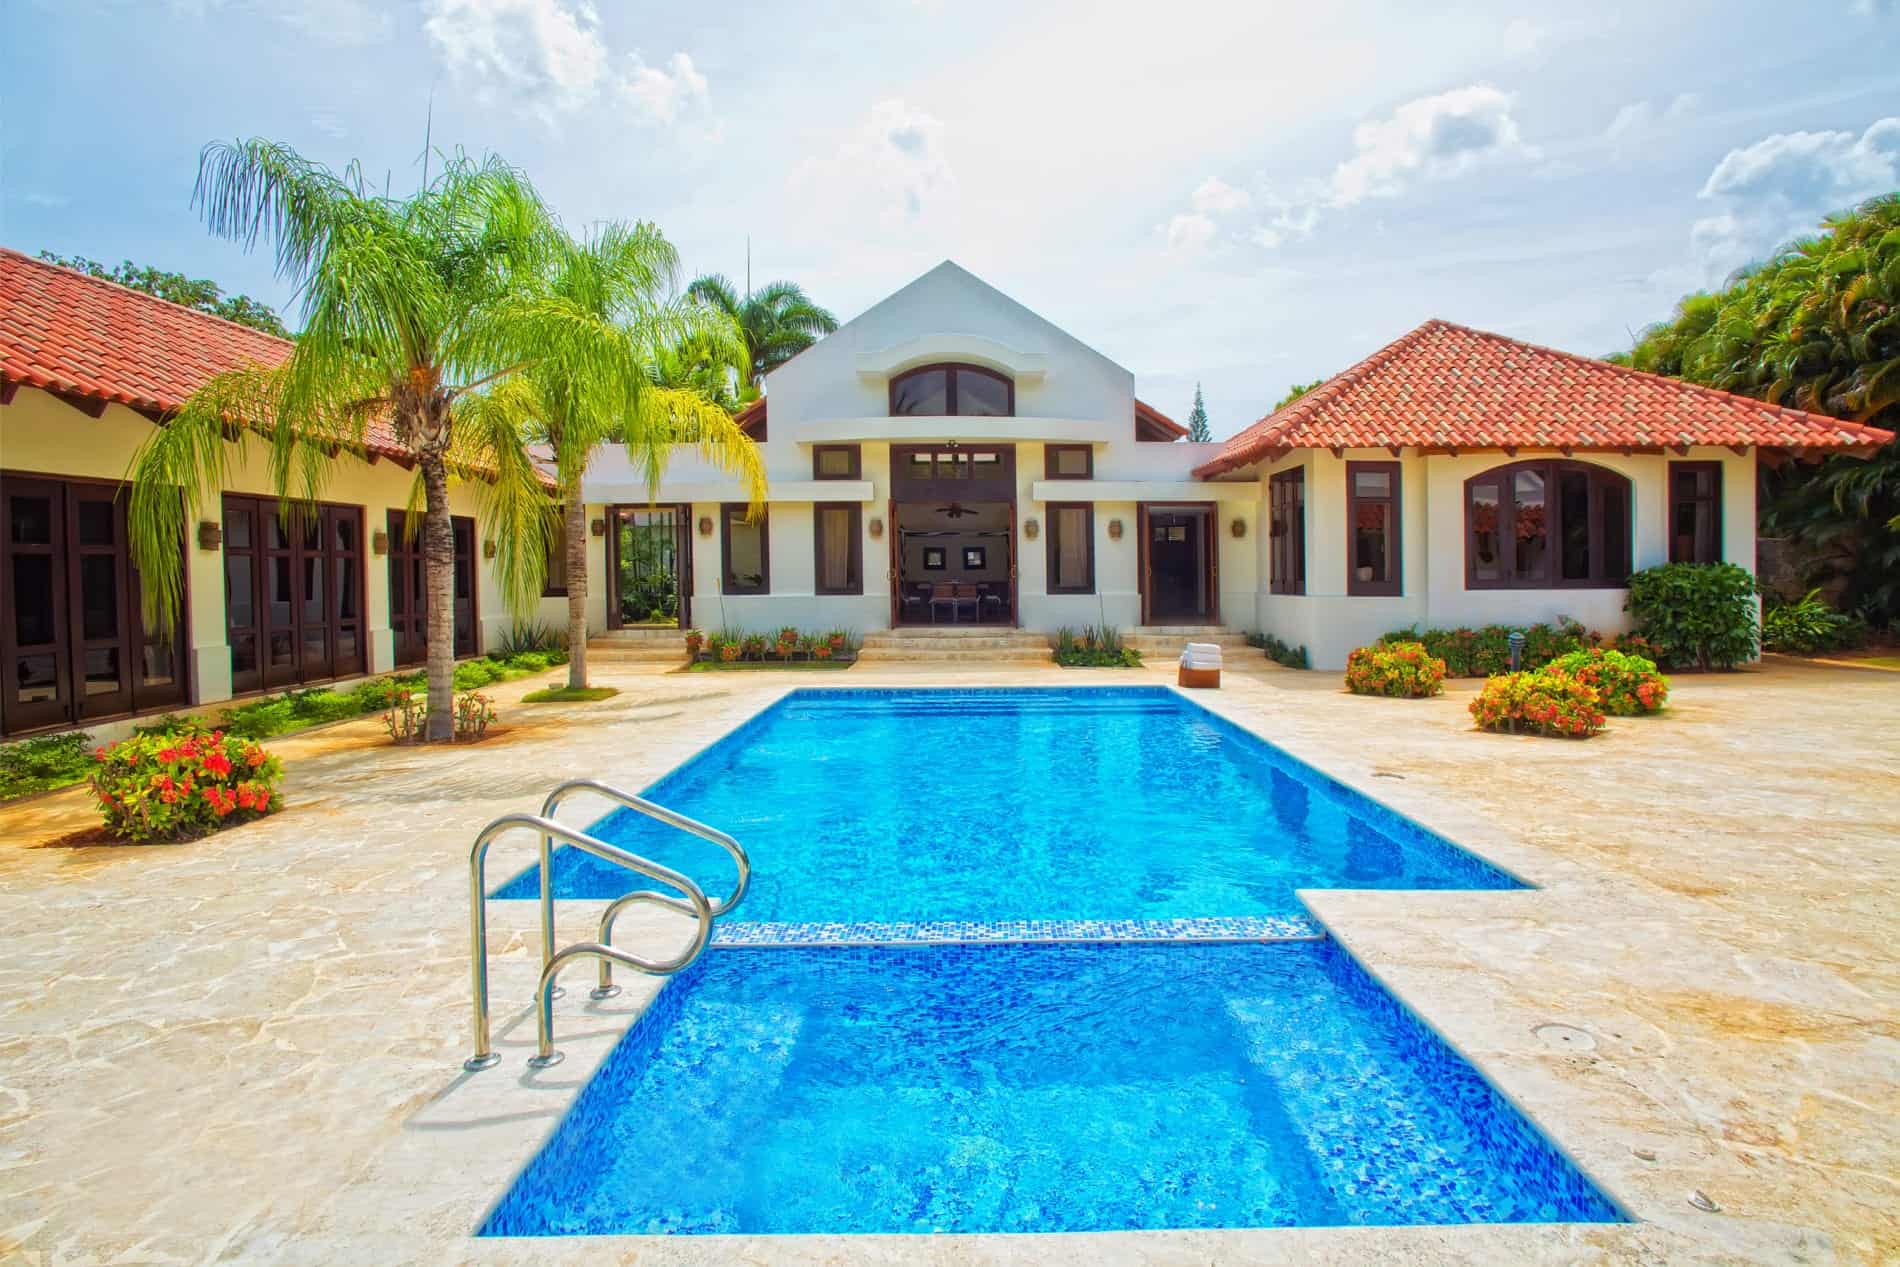 Casa De Campo Resort And Villas In Hotels Caribbean Dominican Republic With Sn Travel